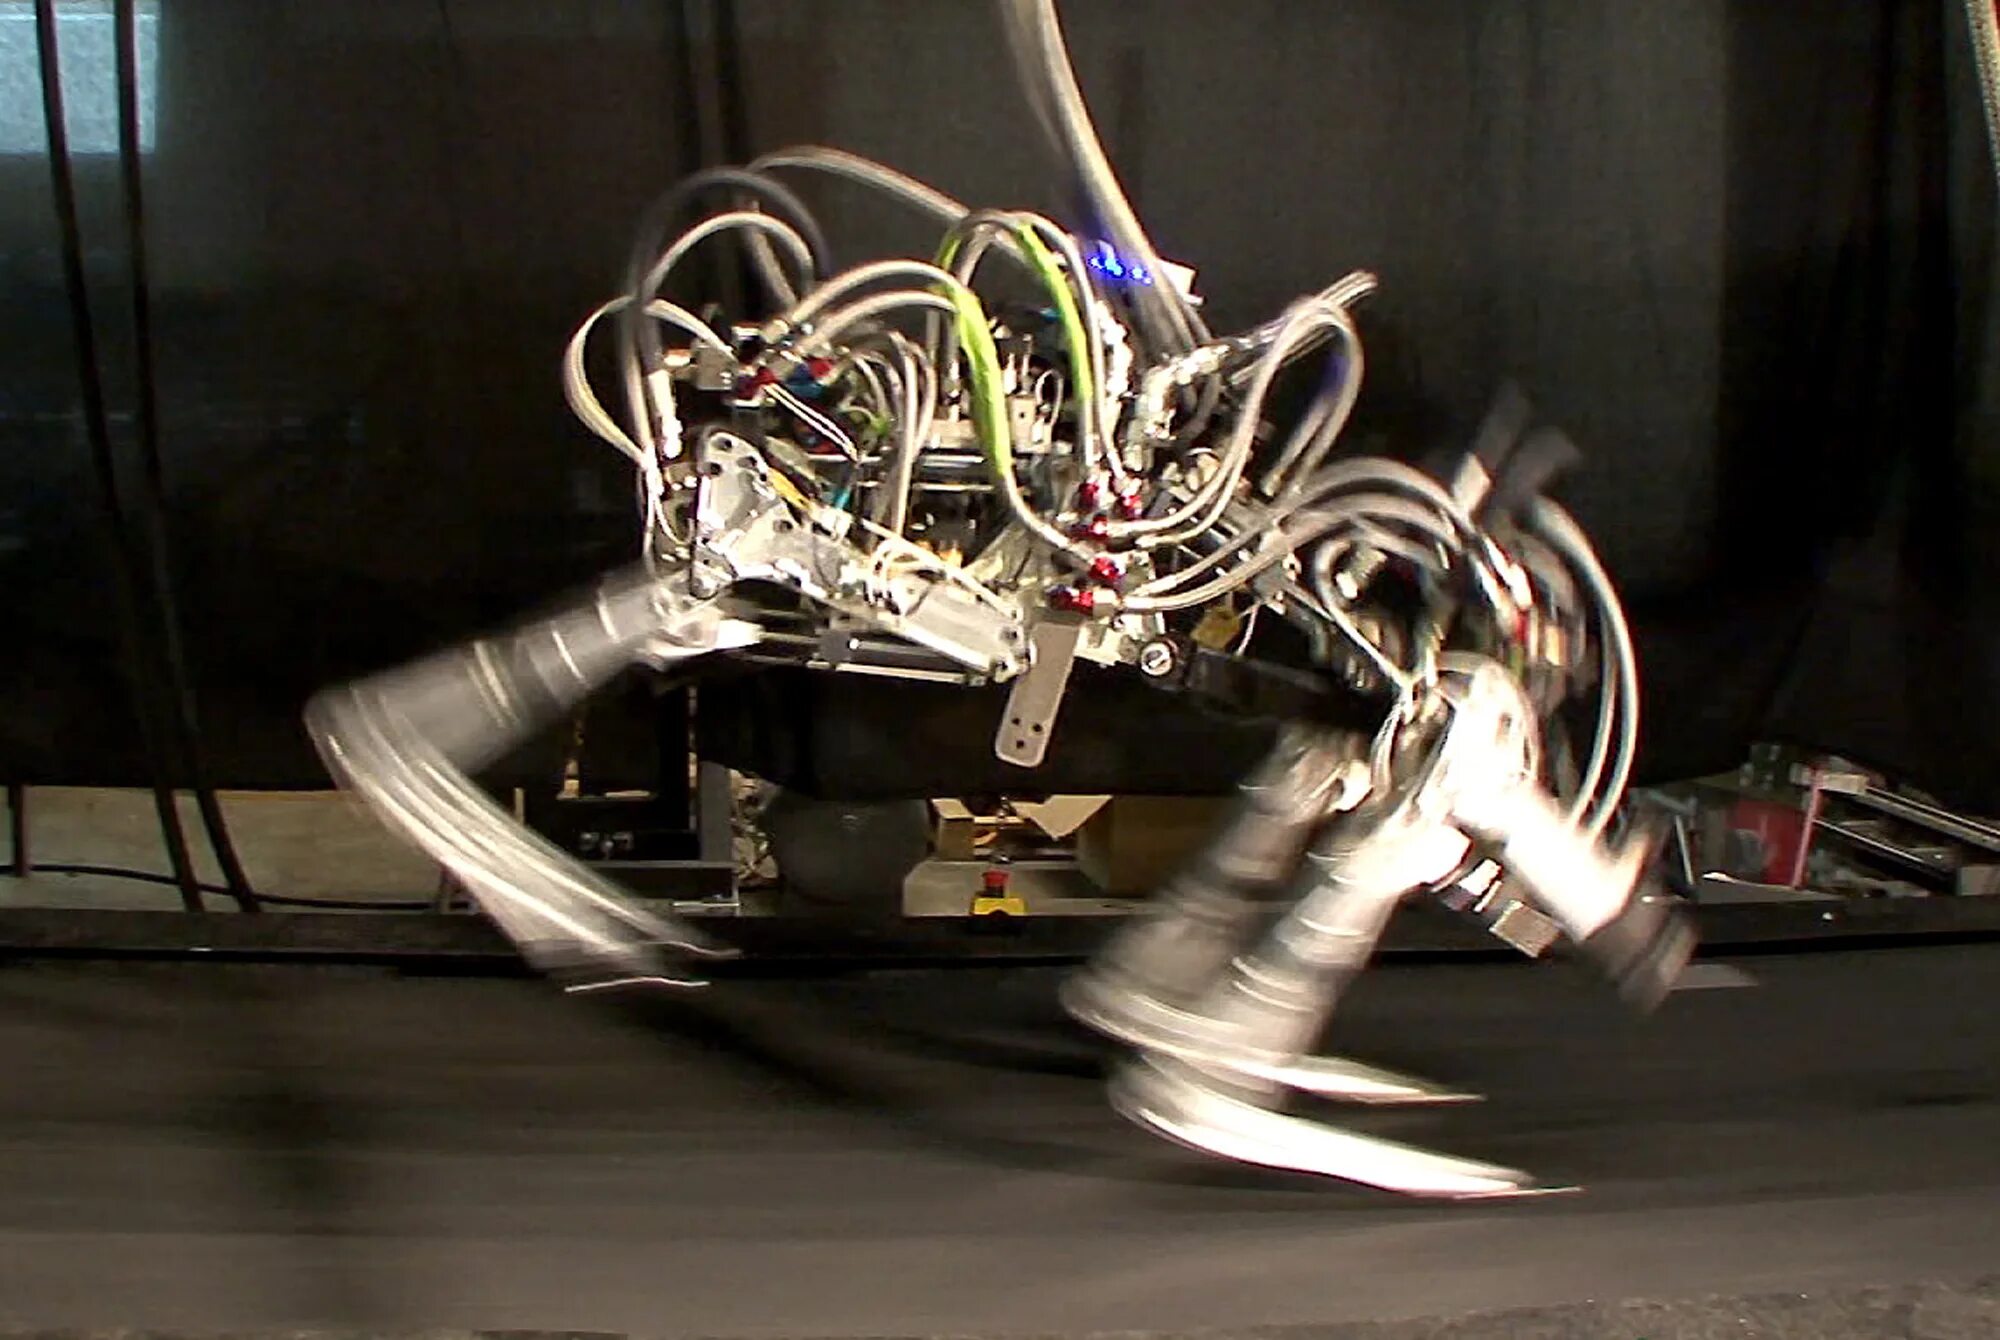 Robot de jole by gaspr. Cheetah робот Boston Dynamics. Робот Бостон Динамикс гепард. Робот-гепард – Cheetah. Cheetah 2, Boston Dynamics, США.